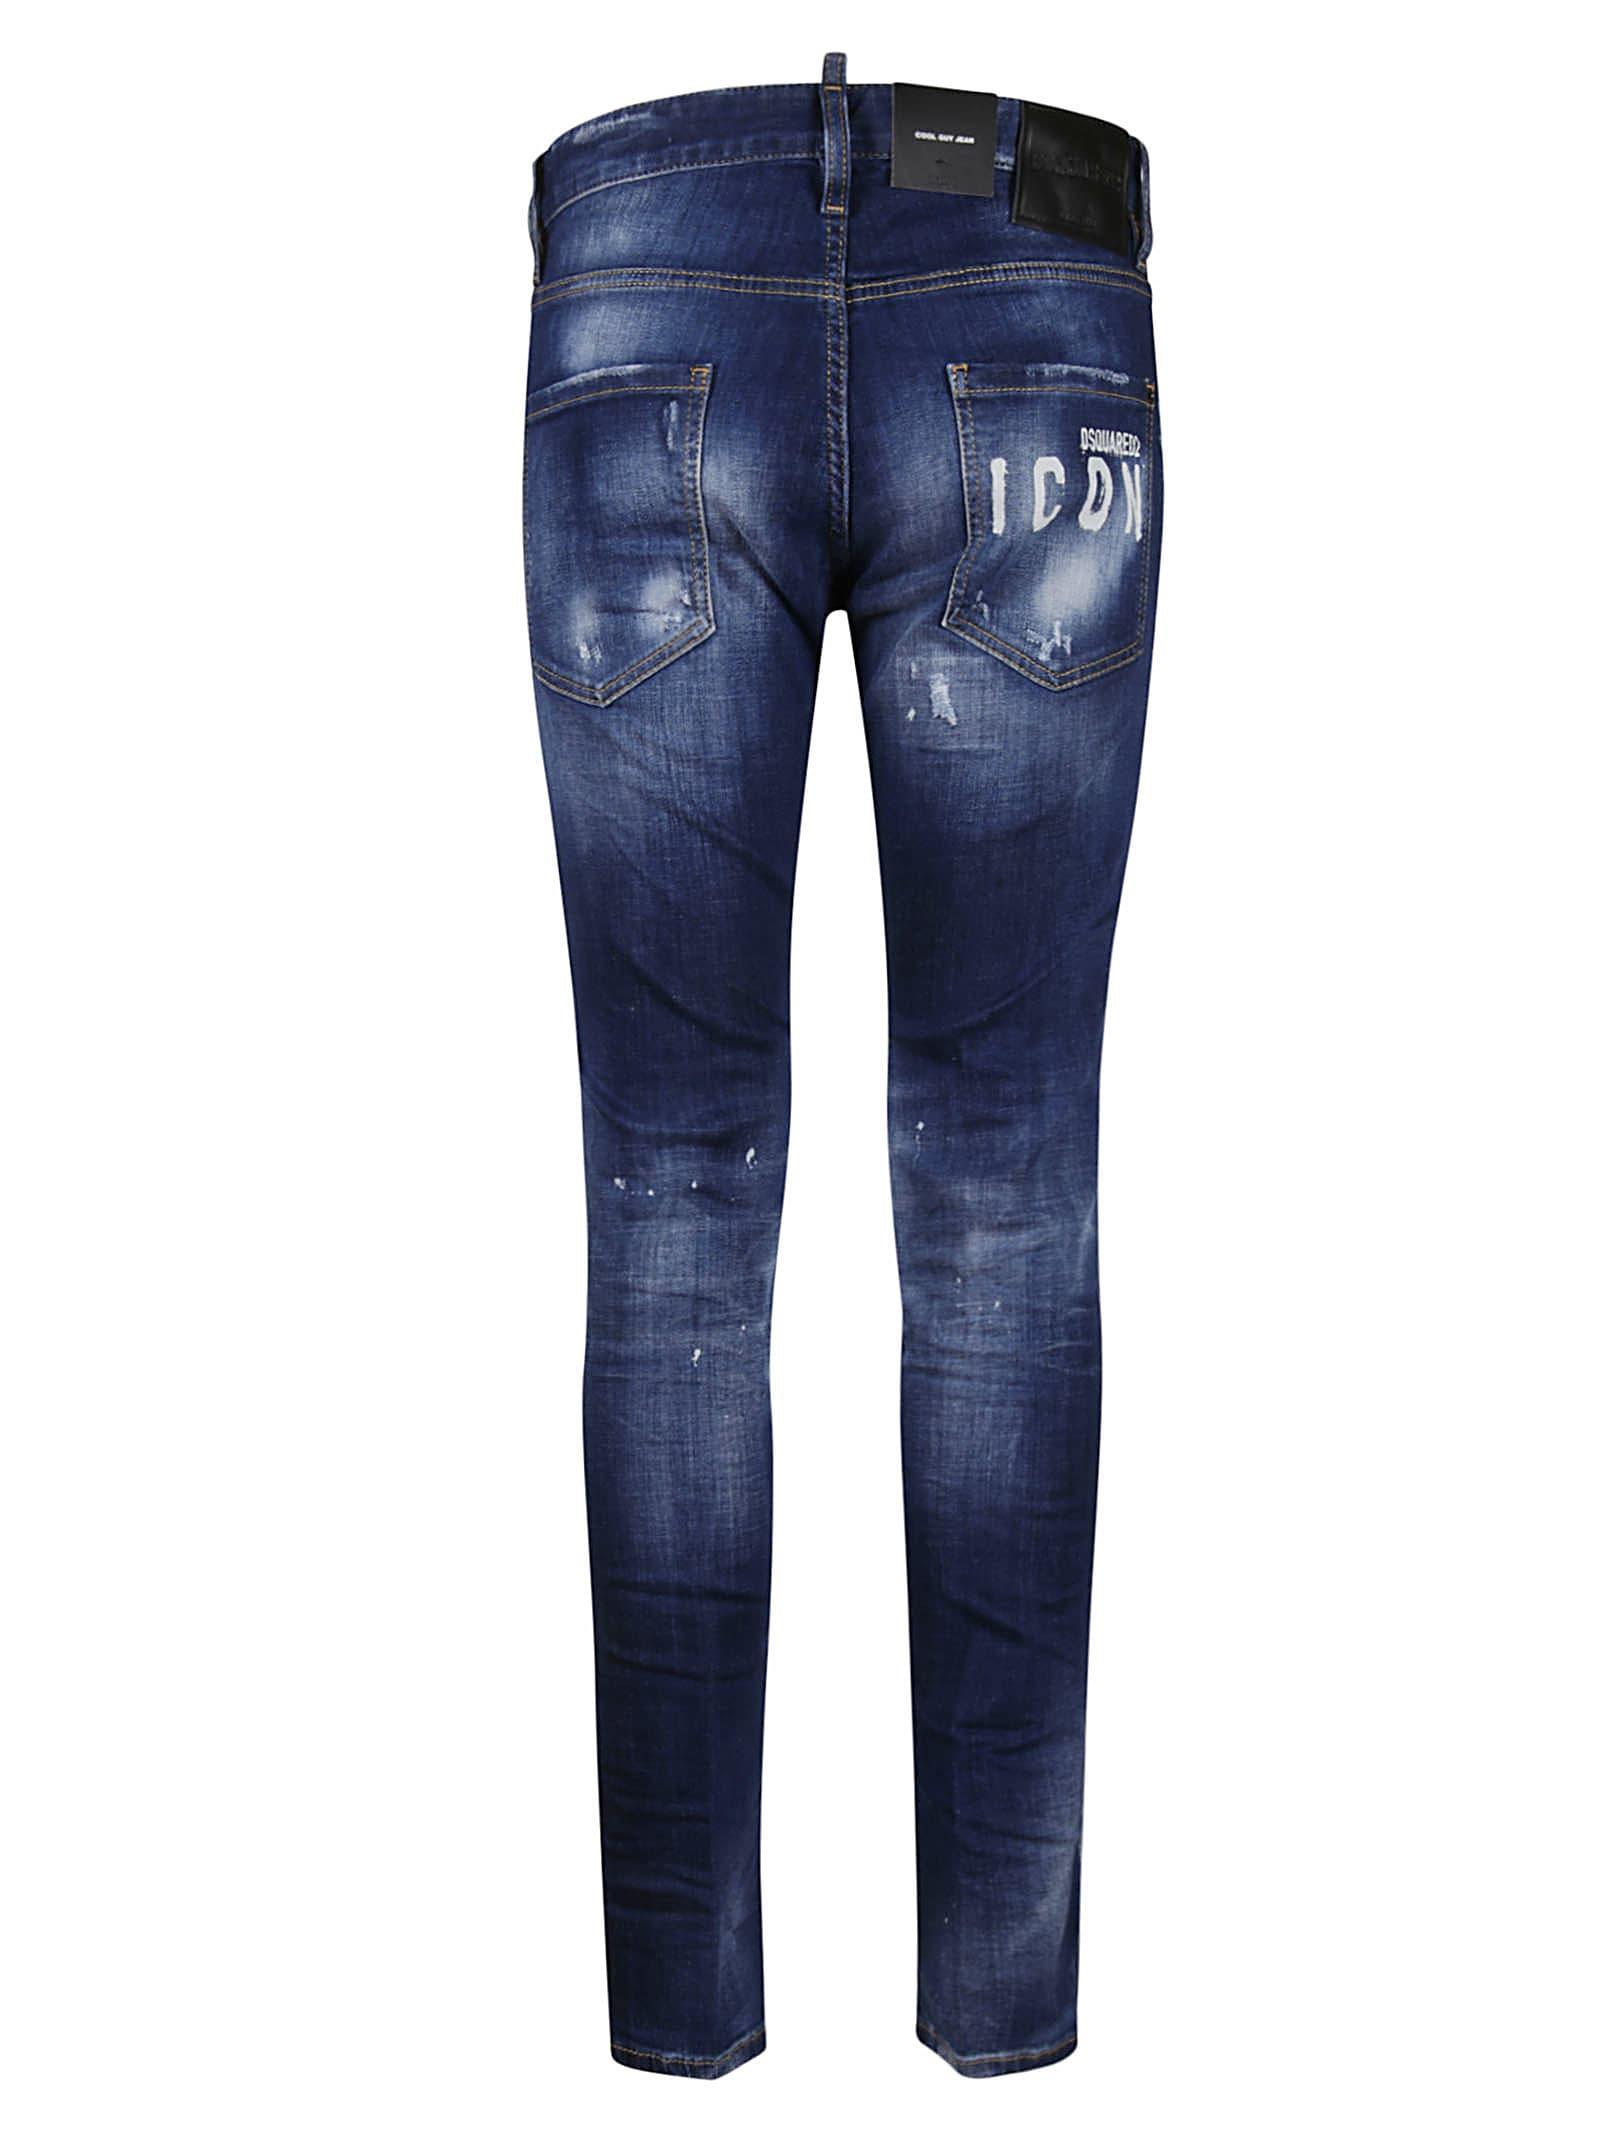 DSquared² Denim Icon Spray Cool Guy Jeans in Denim (Blue) for 